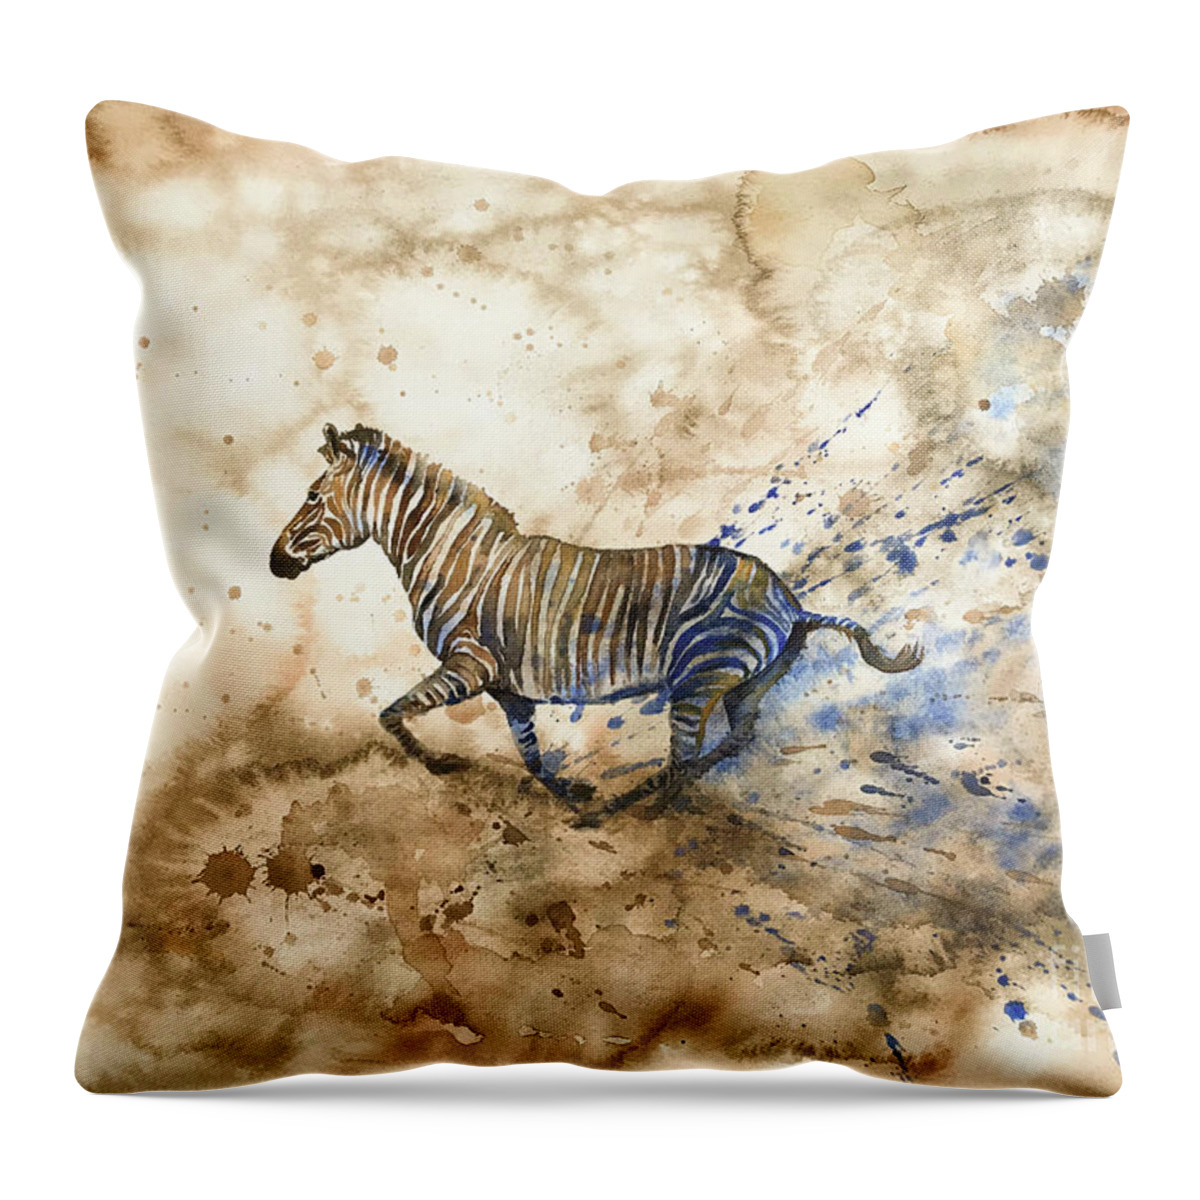 Imperial Zebra Throw Pillow featuring the painting Imperial Zebra by Zaira Dzhaubaeva